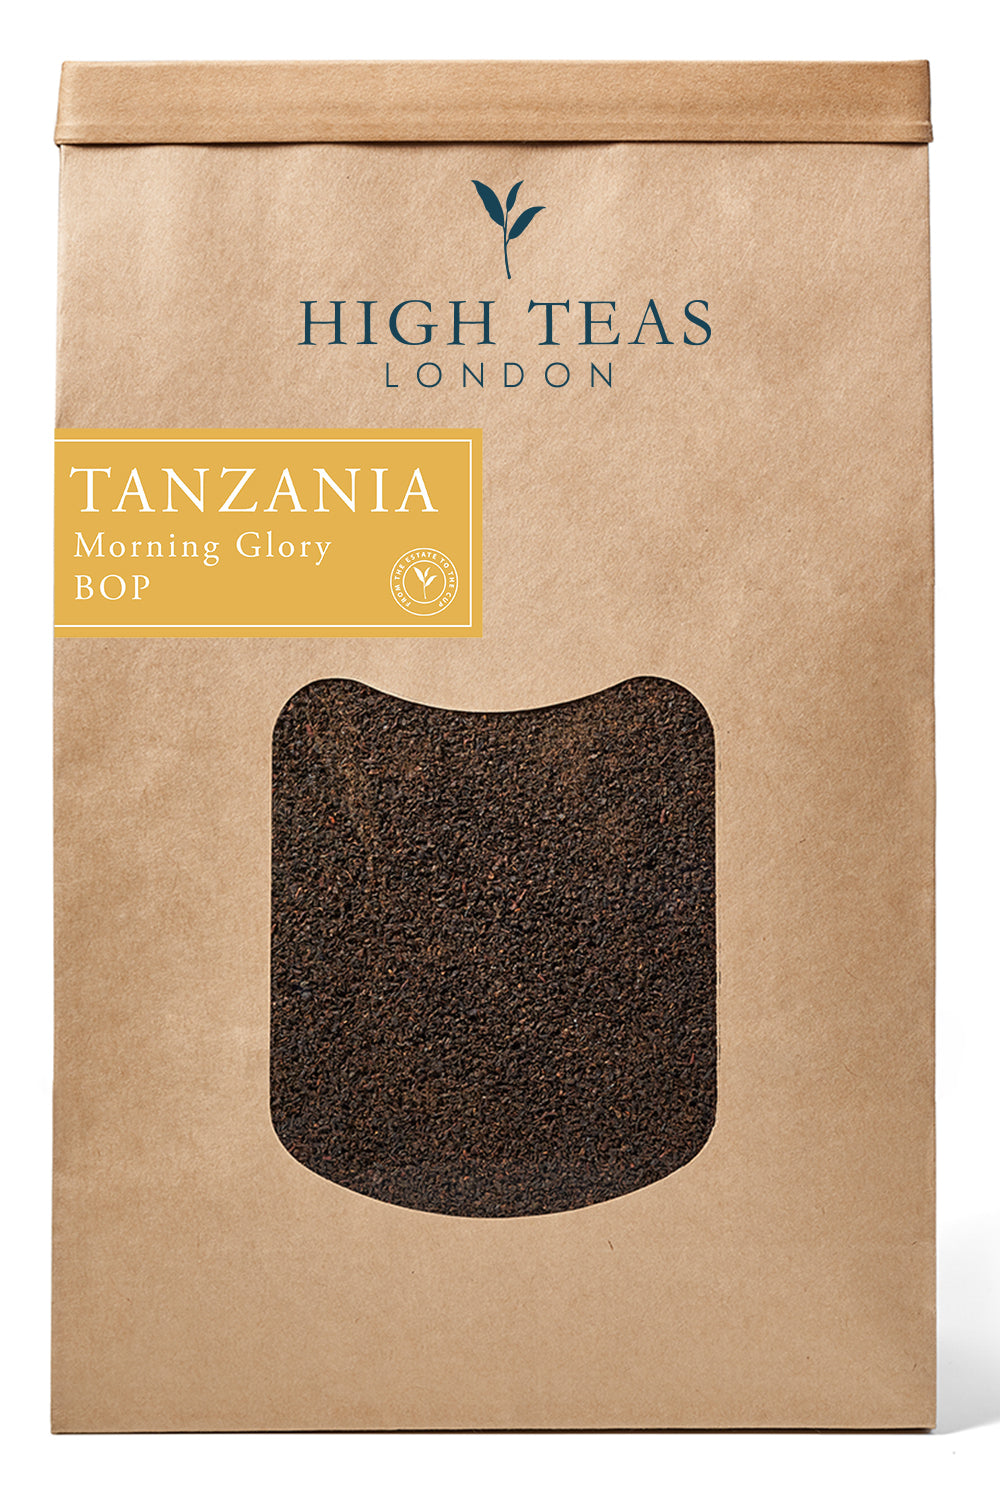 Tanzania BOP (CTC) - "Morning Glory"-500g-Loose Leaf Tea-High Teas